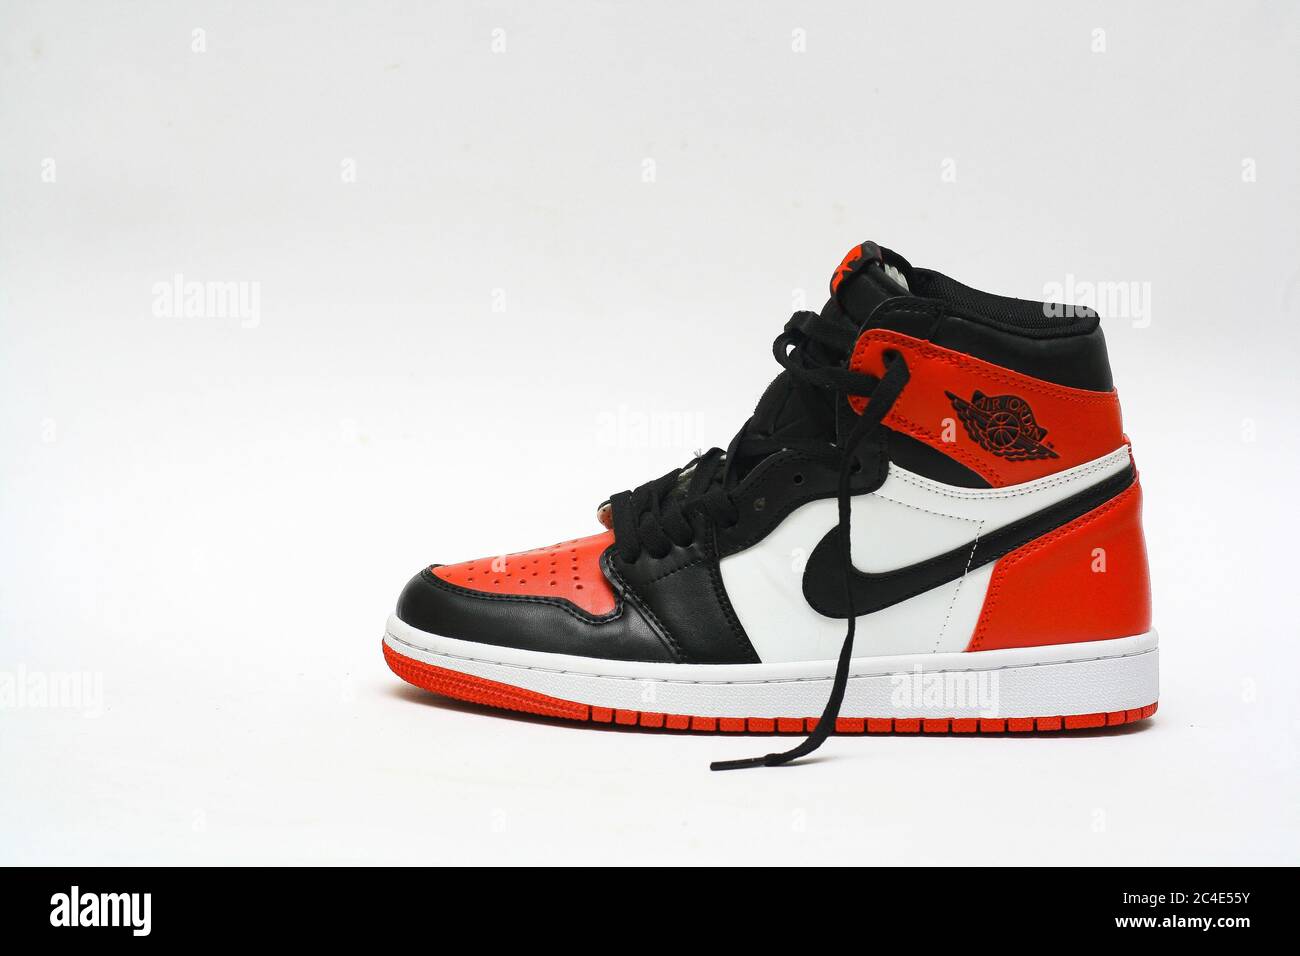 Nike air jordan sneakers hi-res stock photography and images - Alamy